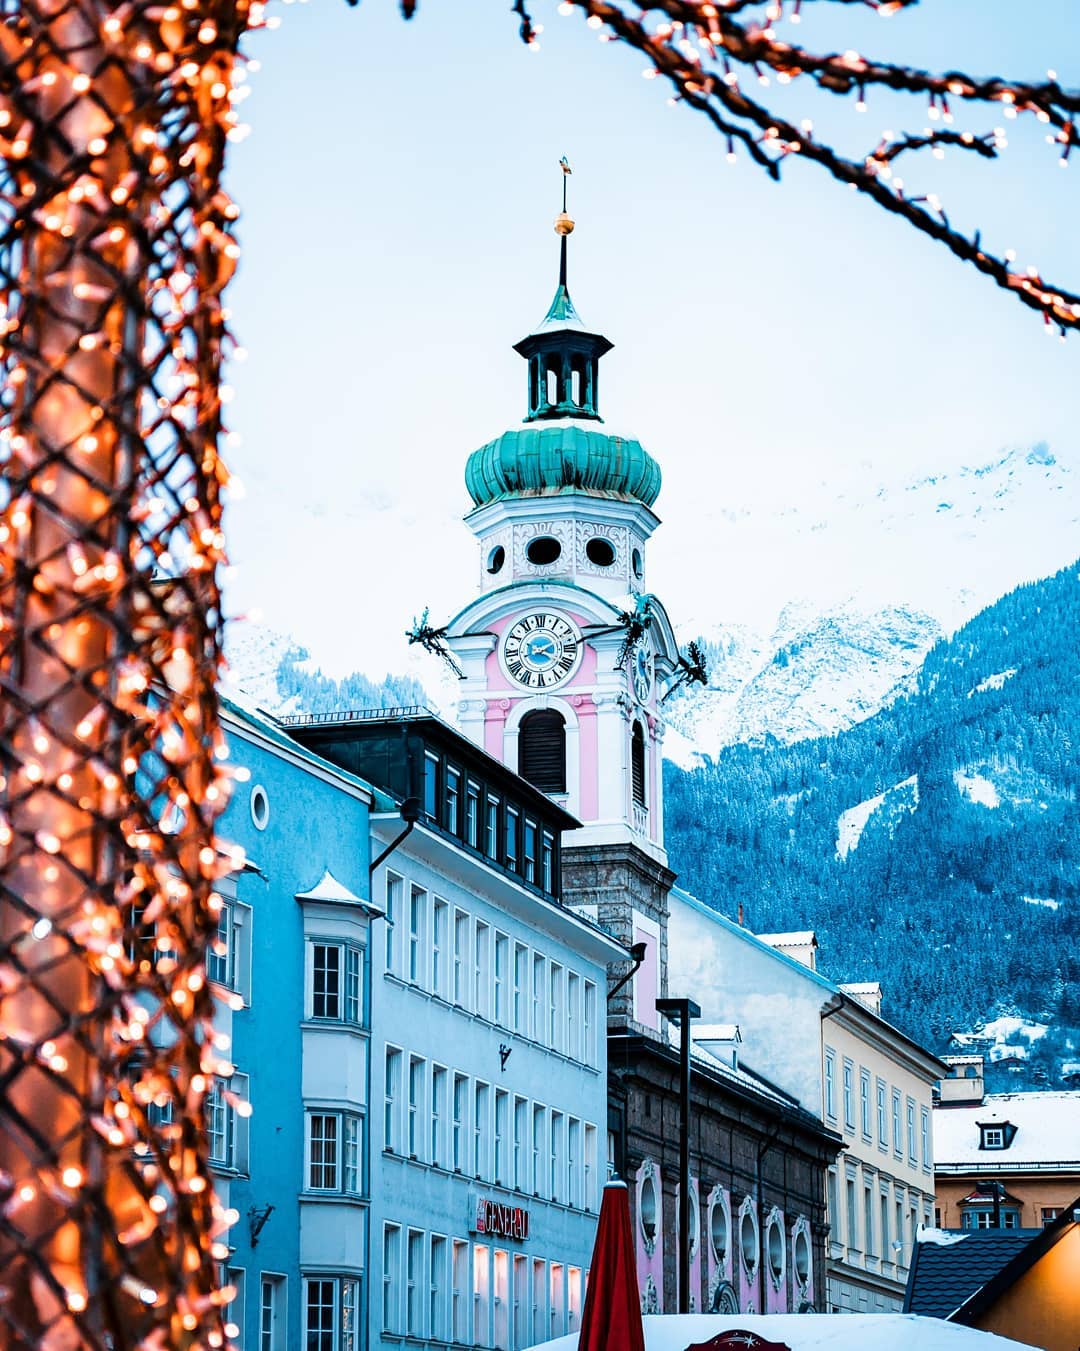 Icy Innsbruck⁠
.⁠
.⁠
.⁠
#visitaustria #travelaustria #discoveraustria #austriatoday #ig_austria #austriavacations #topaustriaphoto #feelaustria #visitinaustria #igersaustria #365austria #loves_austria #photos_dailydose #igworldclub #thevisualgrams #photorupt #DFDS #weekly_feature #shutterhype #ig_europe #TLPicks #ig_udog #yallerseurope#super_europe #living_europe #rangecollective #discoverinnsbruck #myInnsbruck #loveinnsbruck #InnsbruckGram